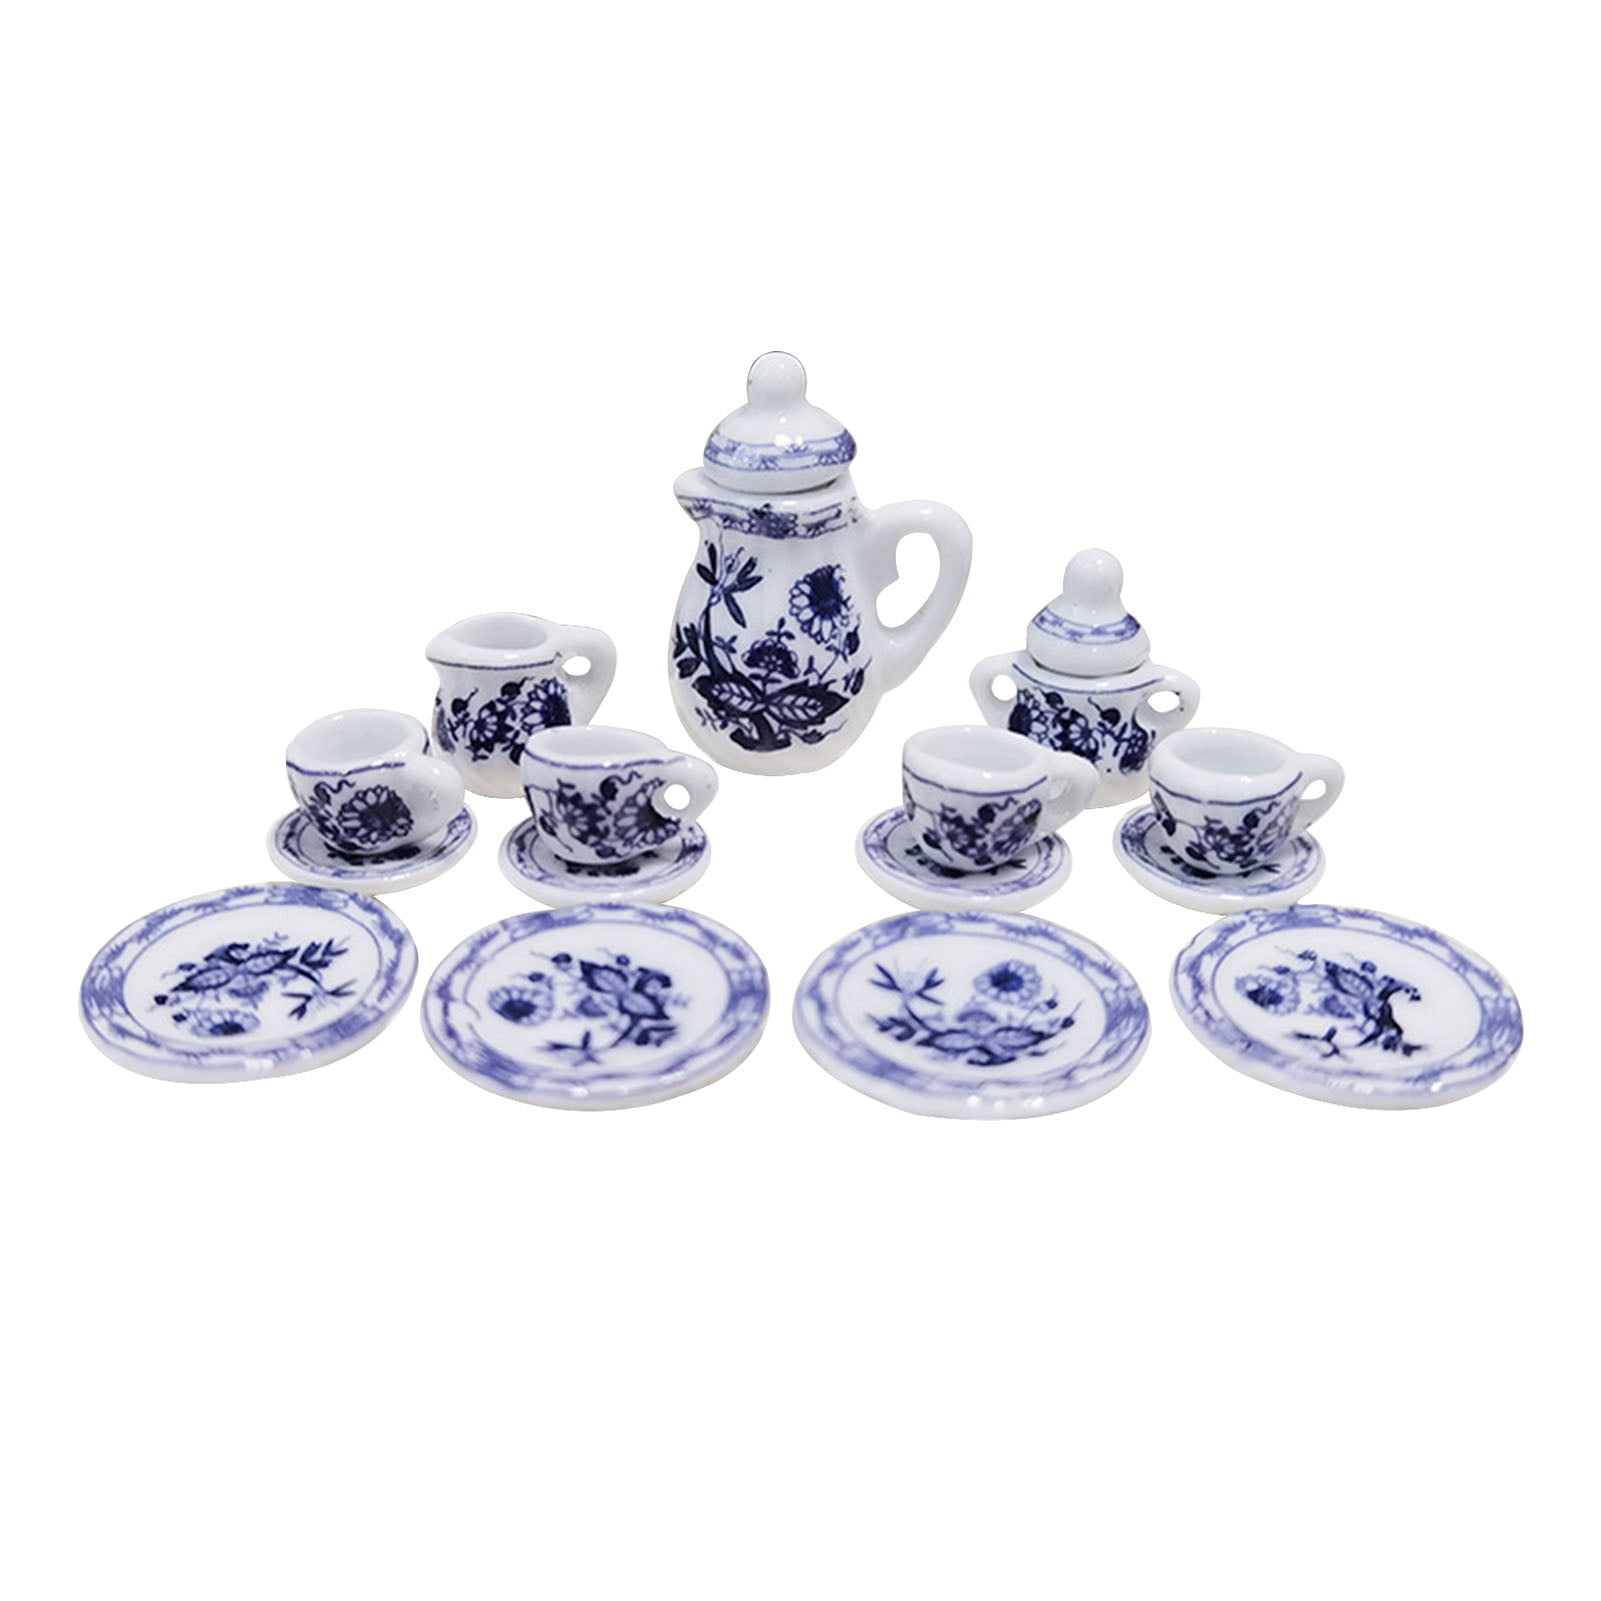 15Pcs 1:12 Dollhouse Miniature Porcelain Tea Cup Set Dollhouse Kitchen TableODDE 